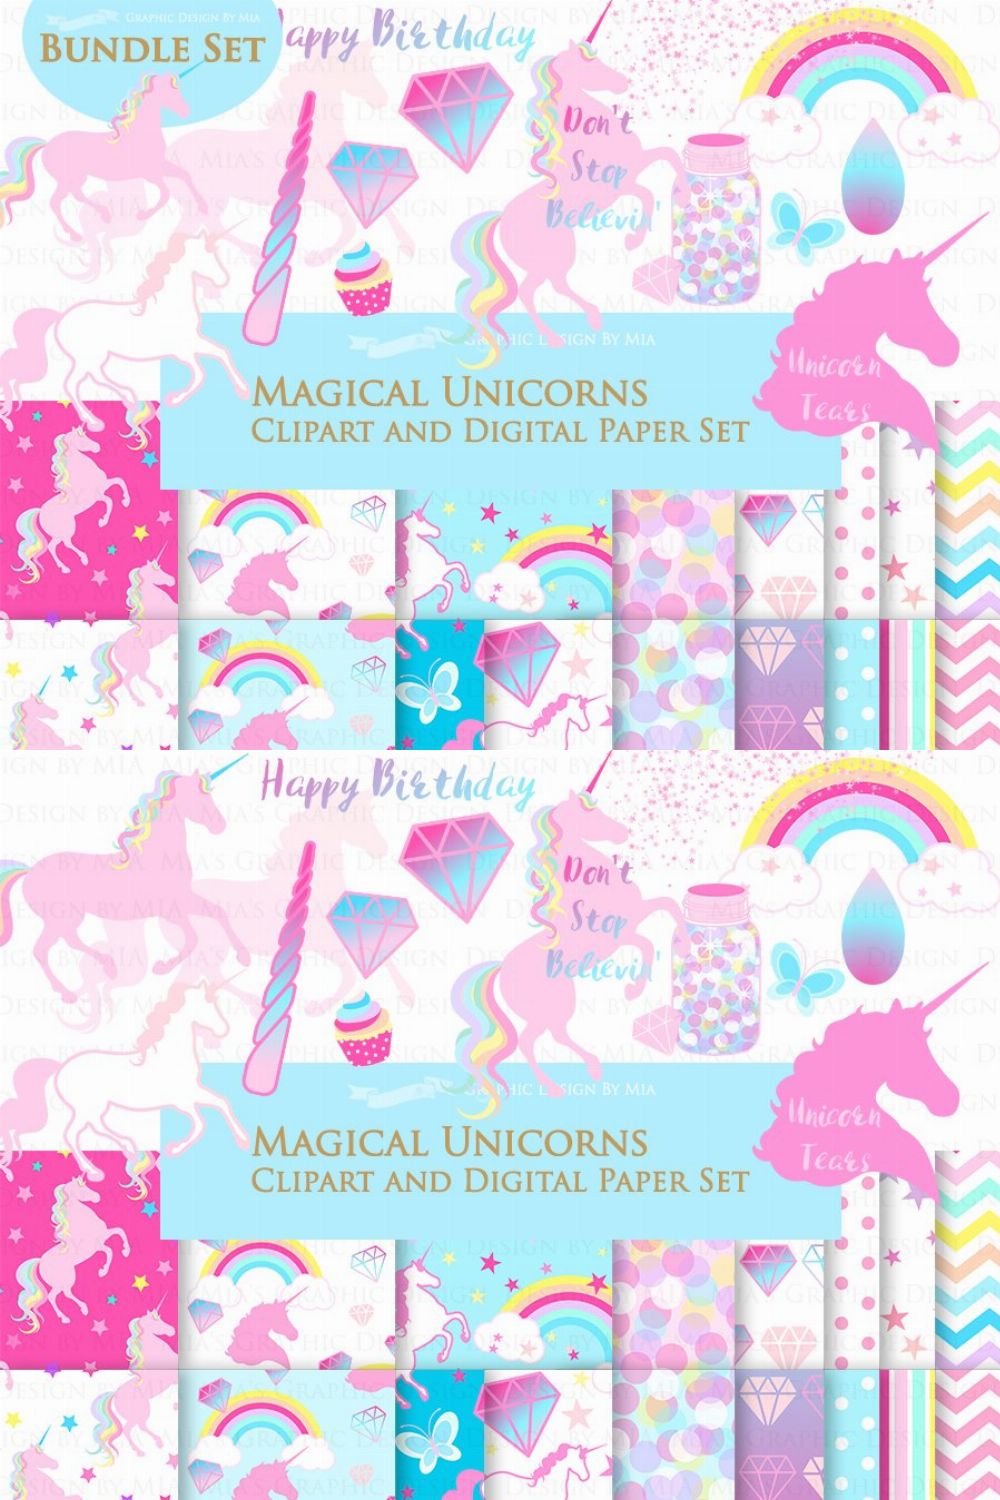 Magical Unicorns, Einhorn, Pink pinterest preview image.